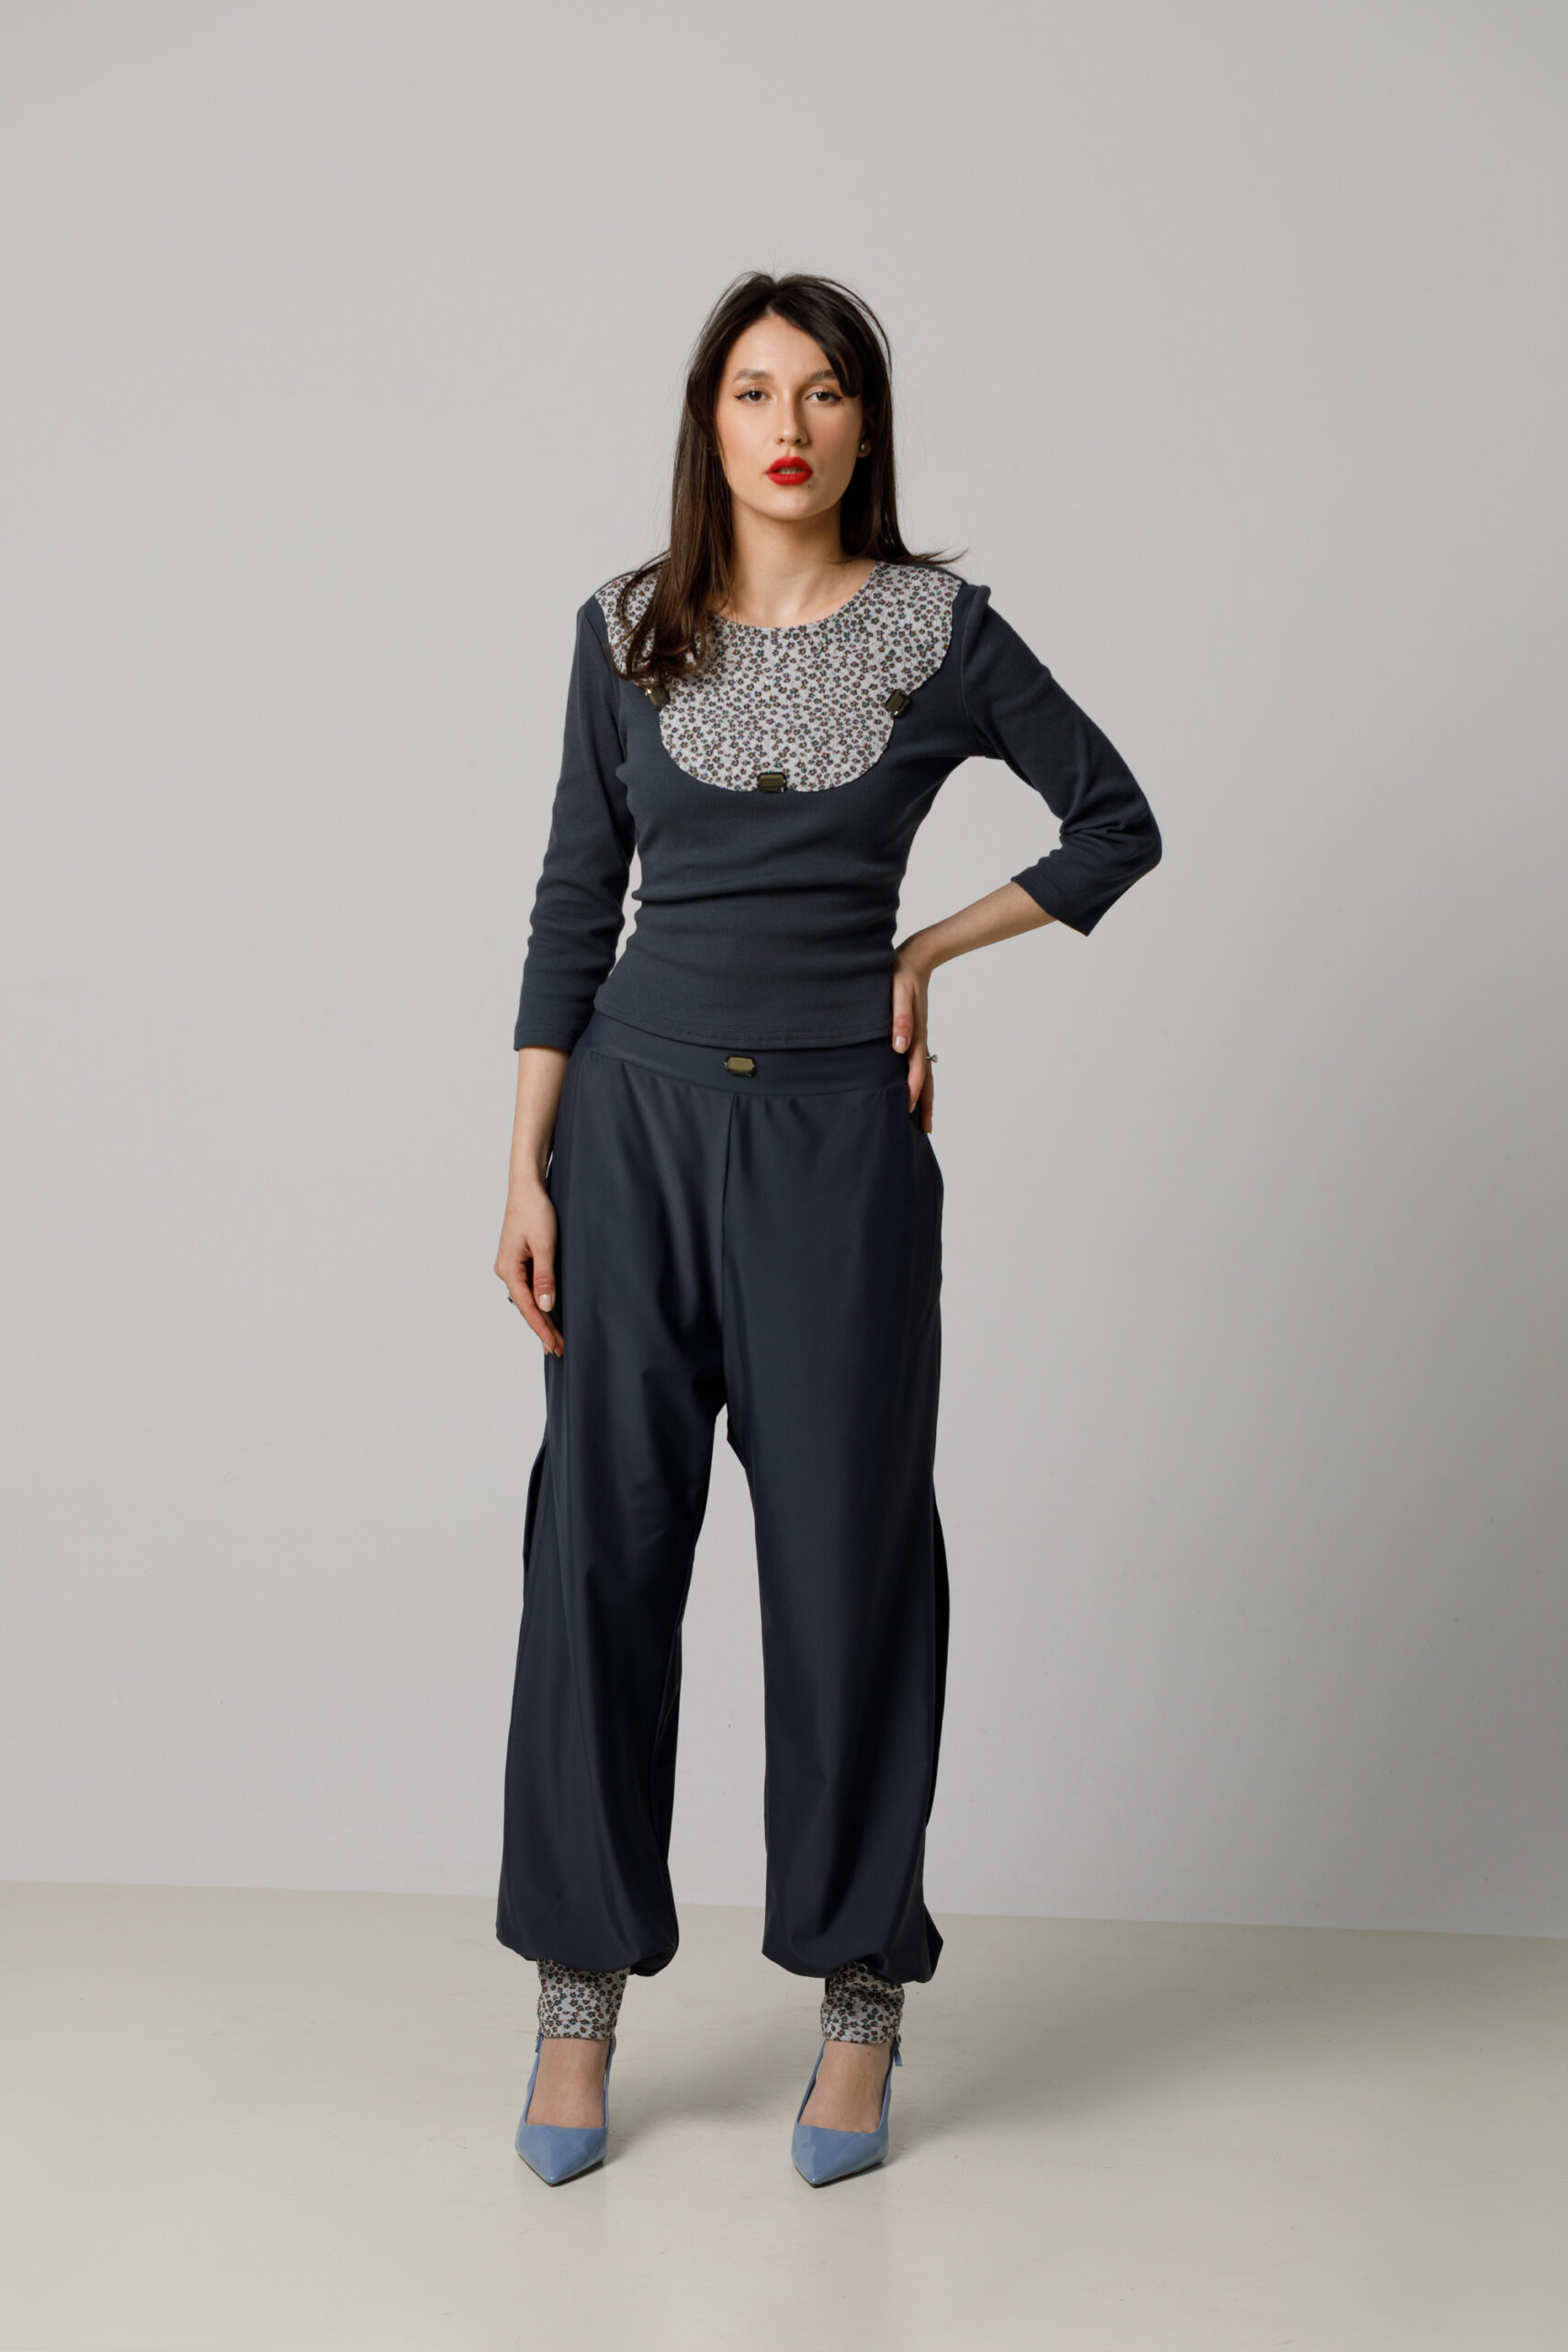 COCO blouse with stone appliqué. Natural fabrics, original design, handmade embroidery